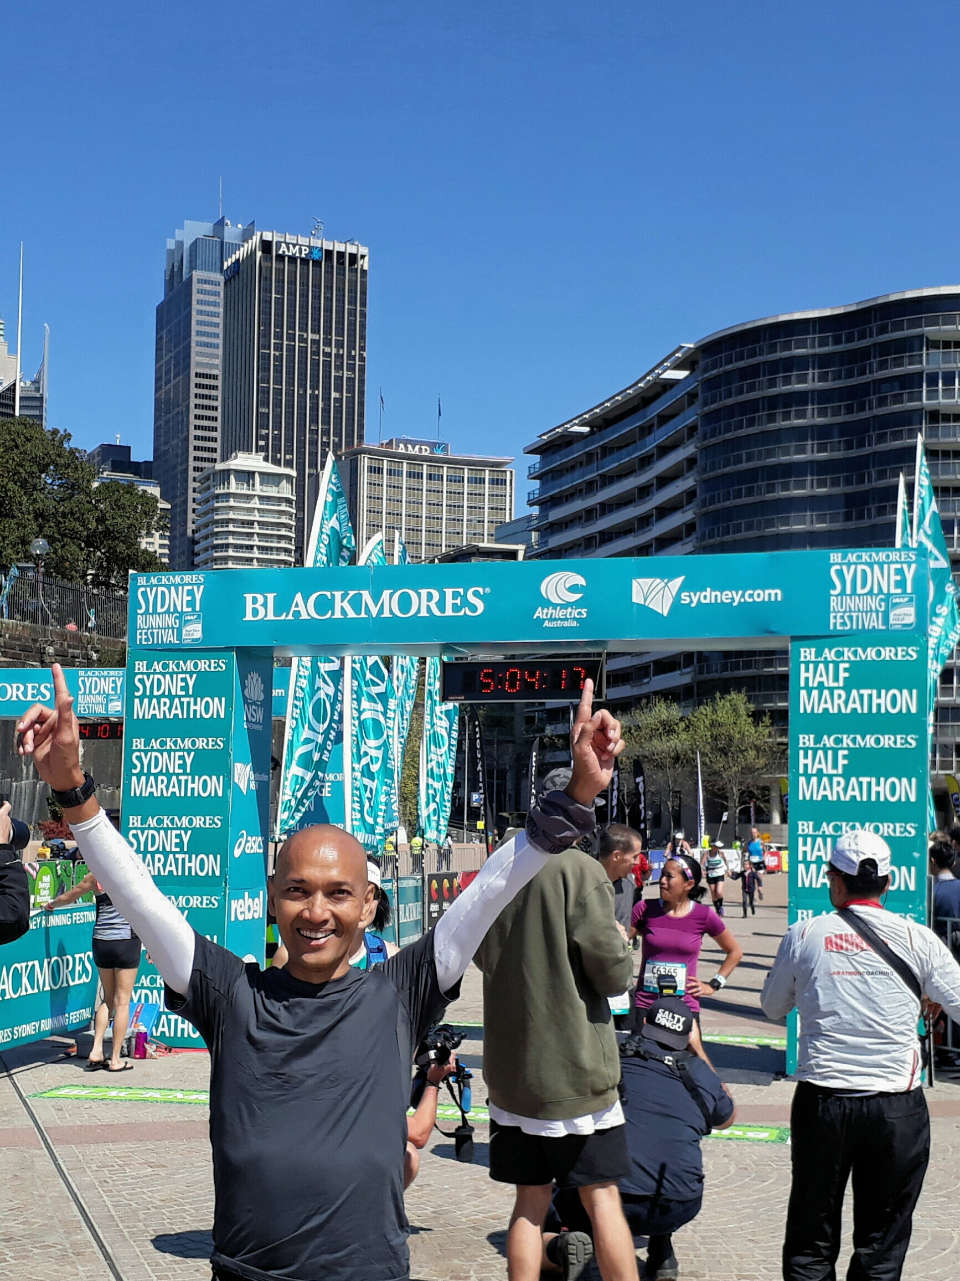 Blackmores Sydney Marathon: Sweet 17 Edition on 17 September 2017